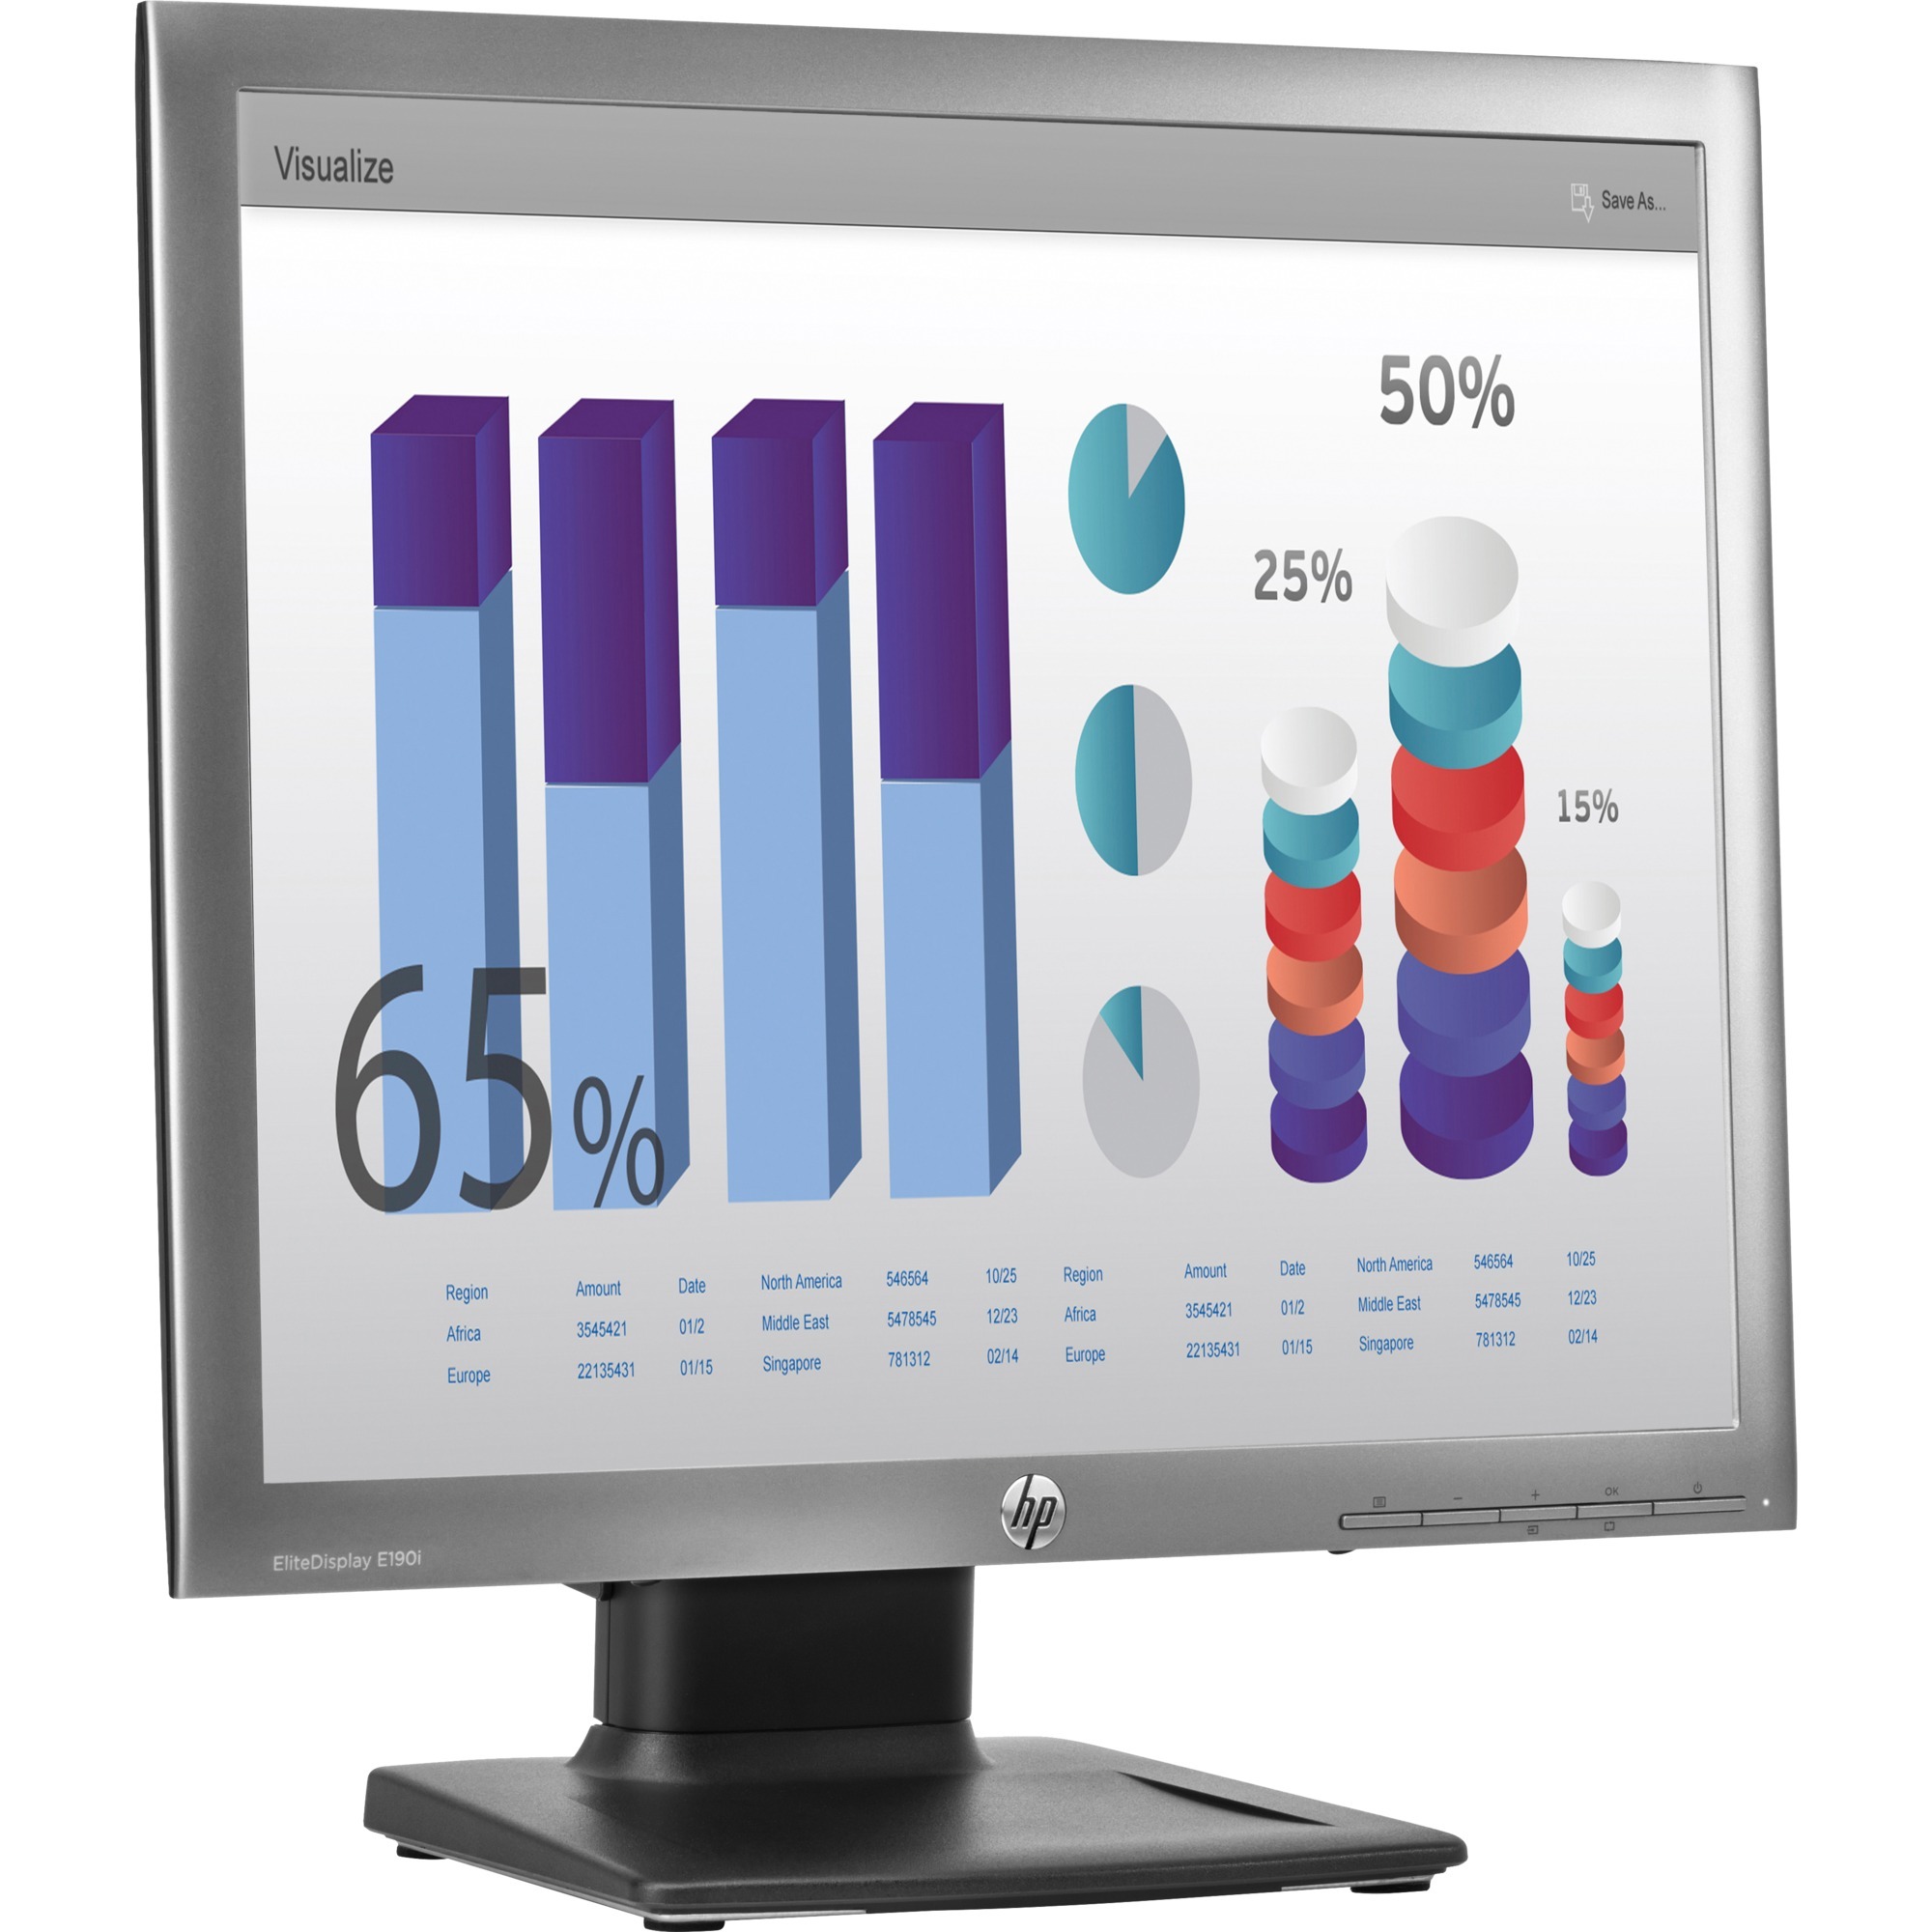 Image of Alternate - EliteDisplay E190i, LED-Monitor online einkaufen bei Alternate